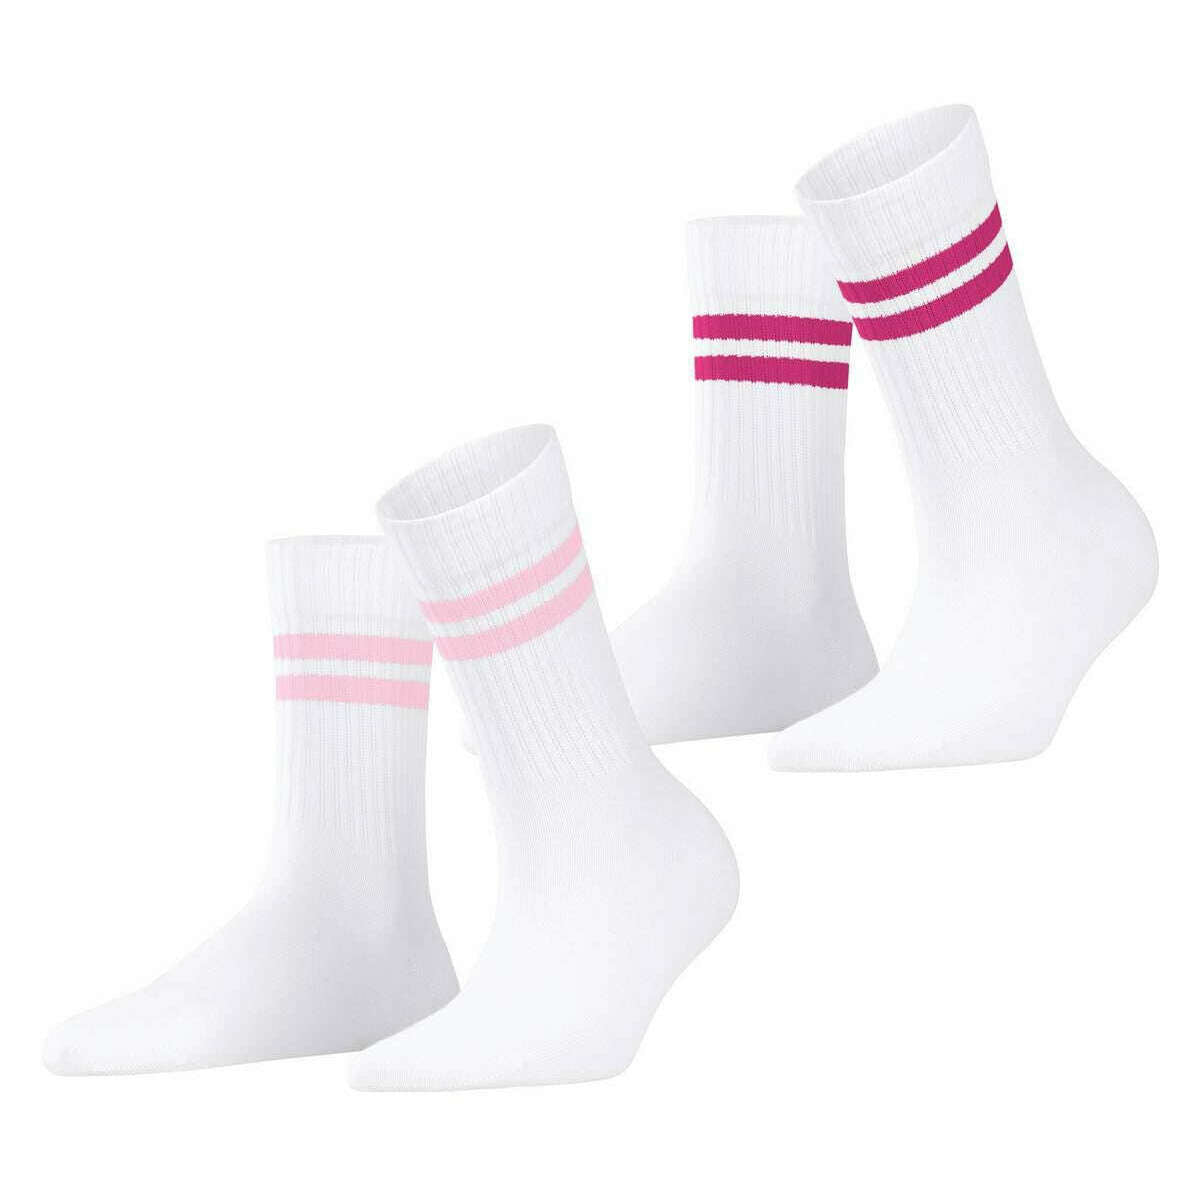 Esprit Tennis Stripe 2 Pack Socks - Cream/Pink